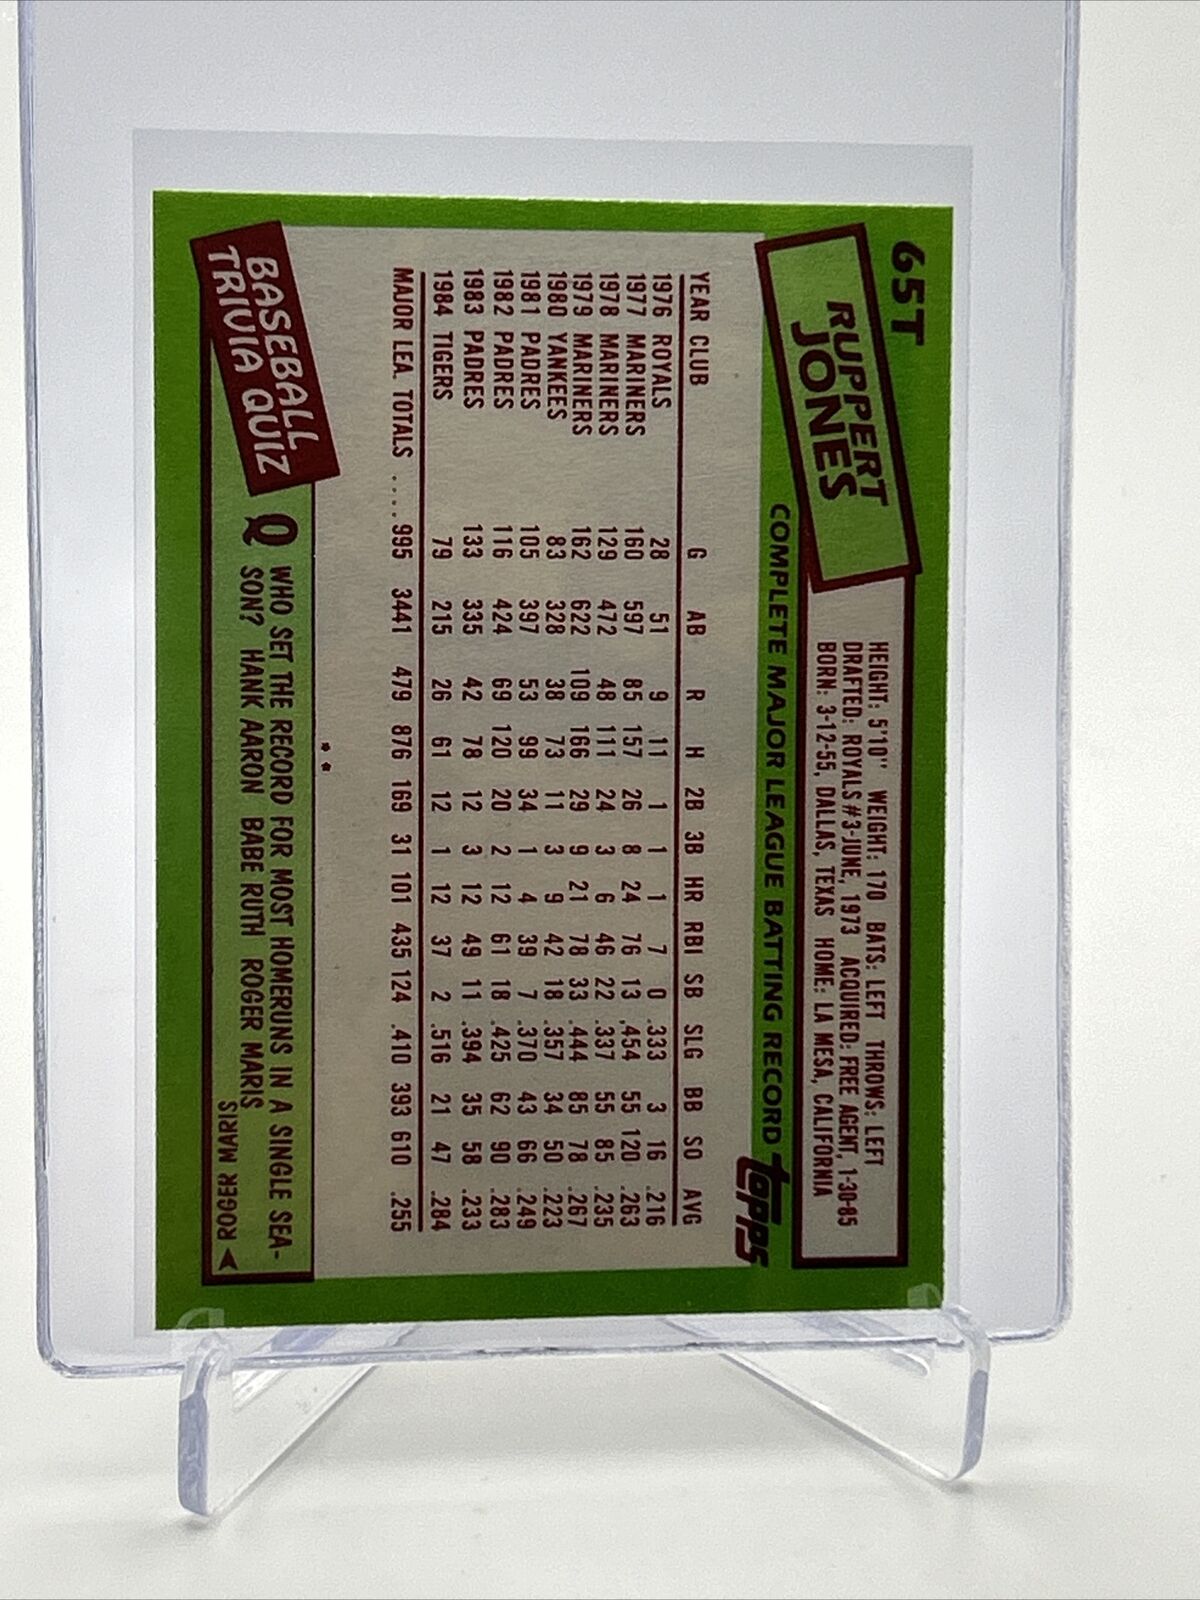 1985 Topps Traded Ruppert Jones Baseball Card #65T NM-MT FREE SHIPPING